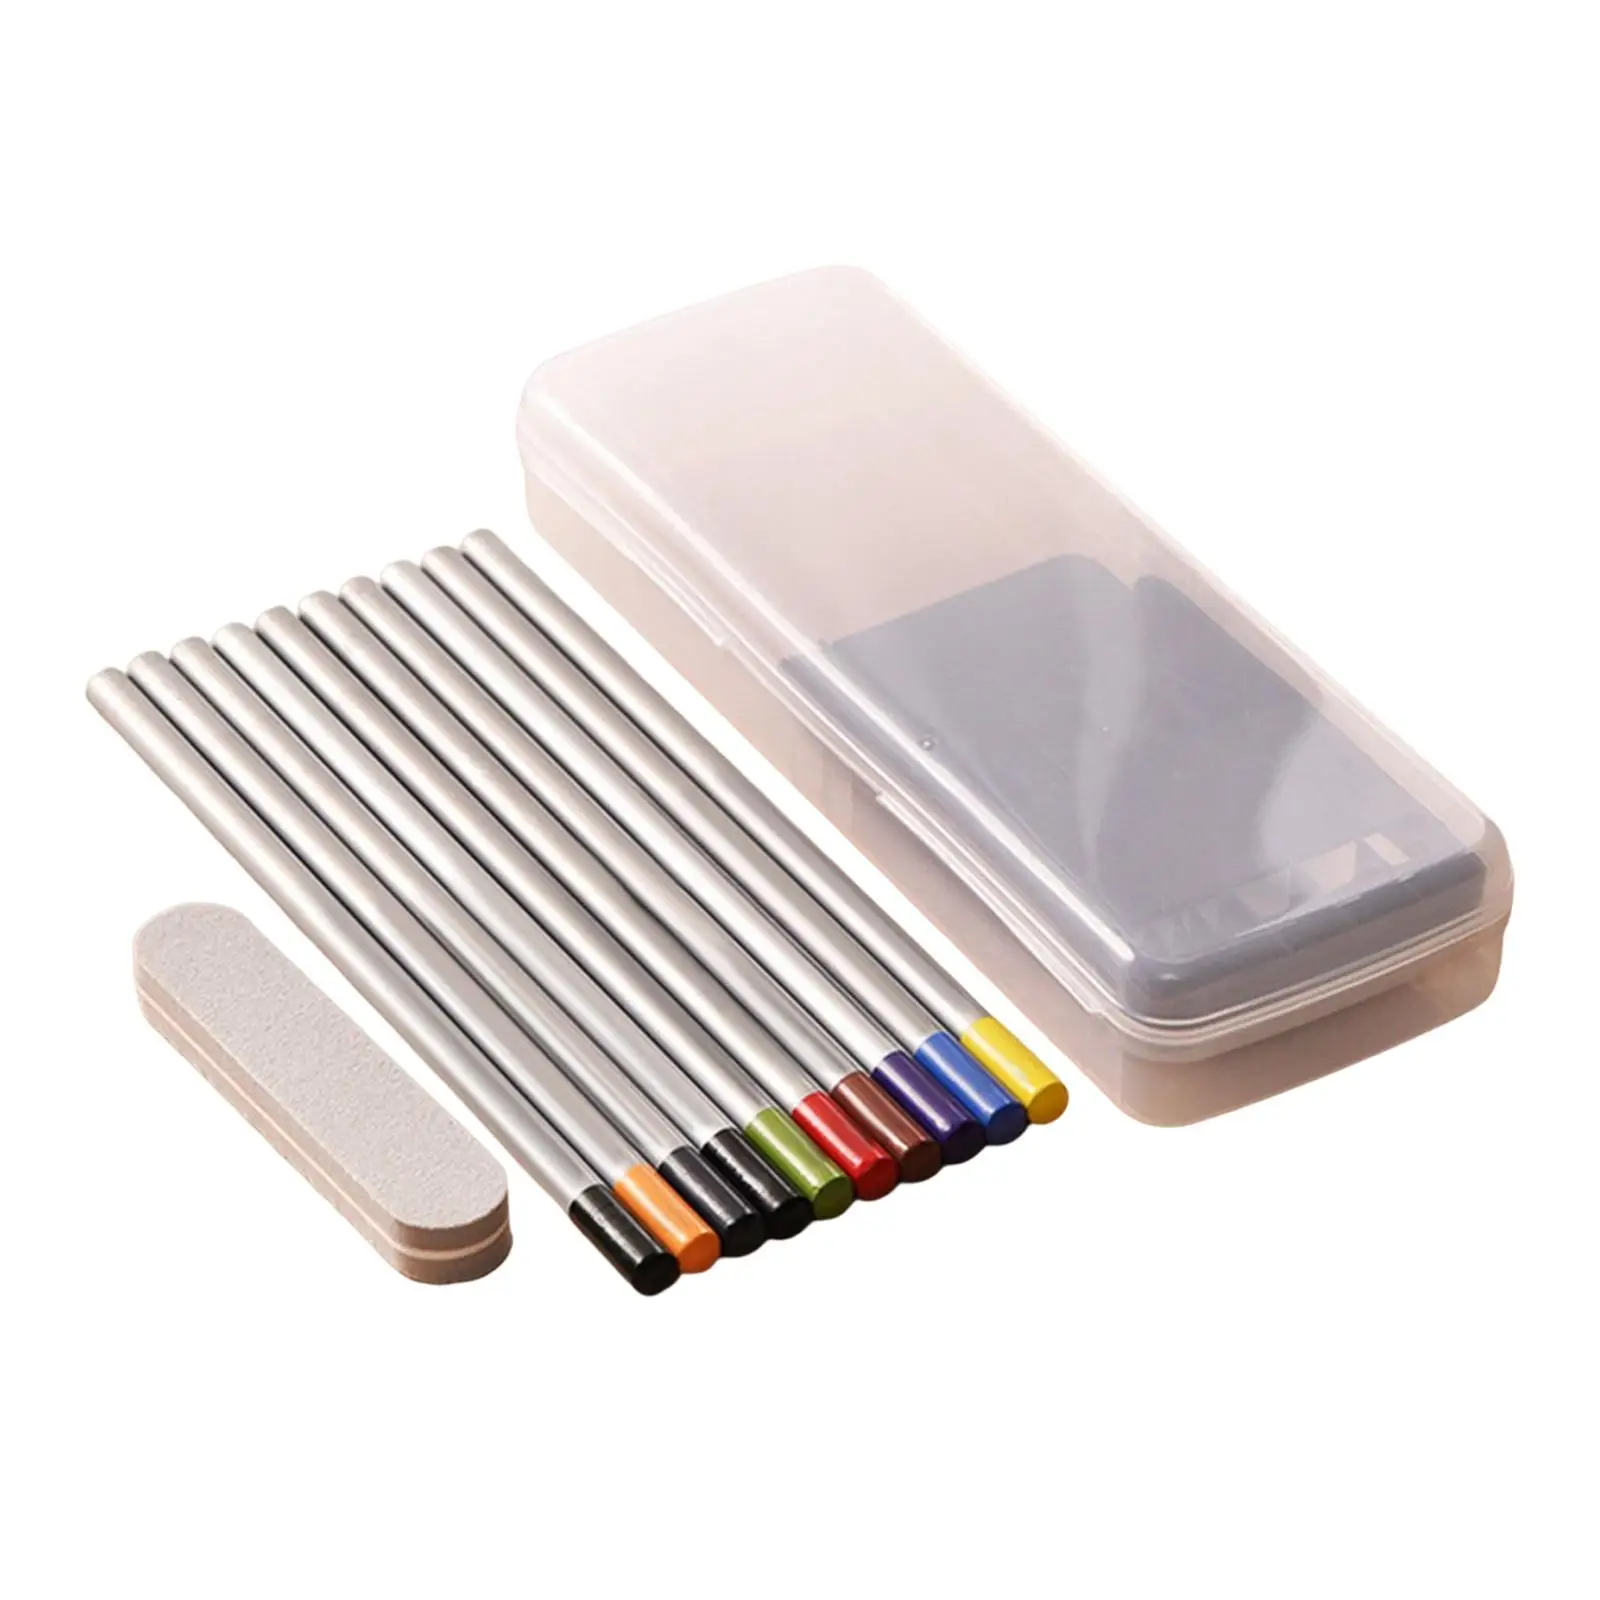 Colored Pencils School Supplies Sketching Coloring Pencil Set 10x Drawing Pencils Glaze Powder Pen for Students Adult Beginner